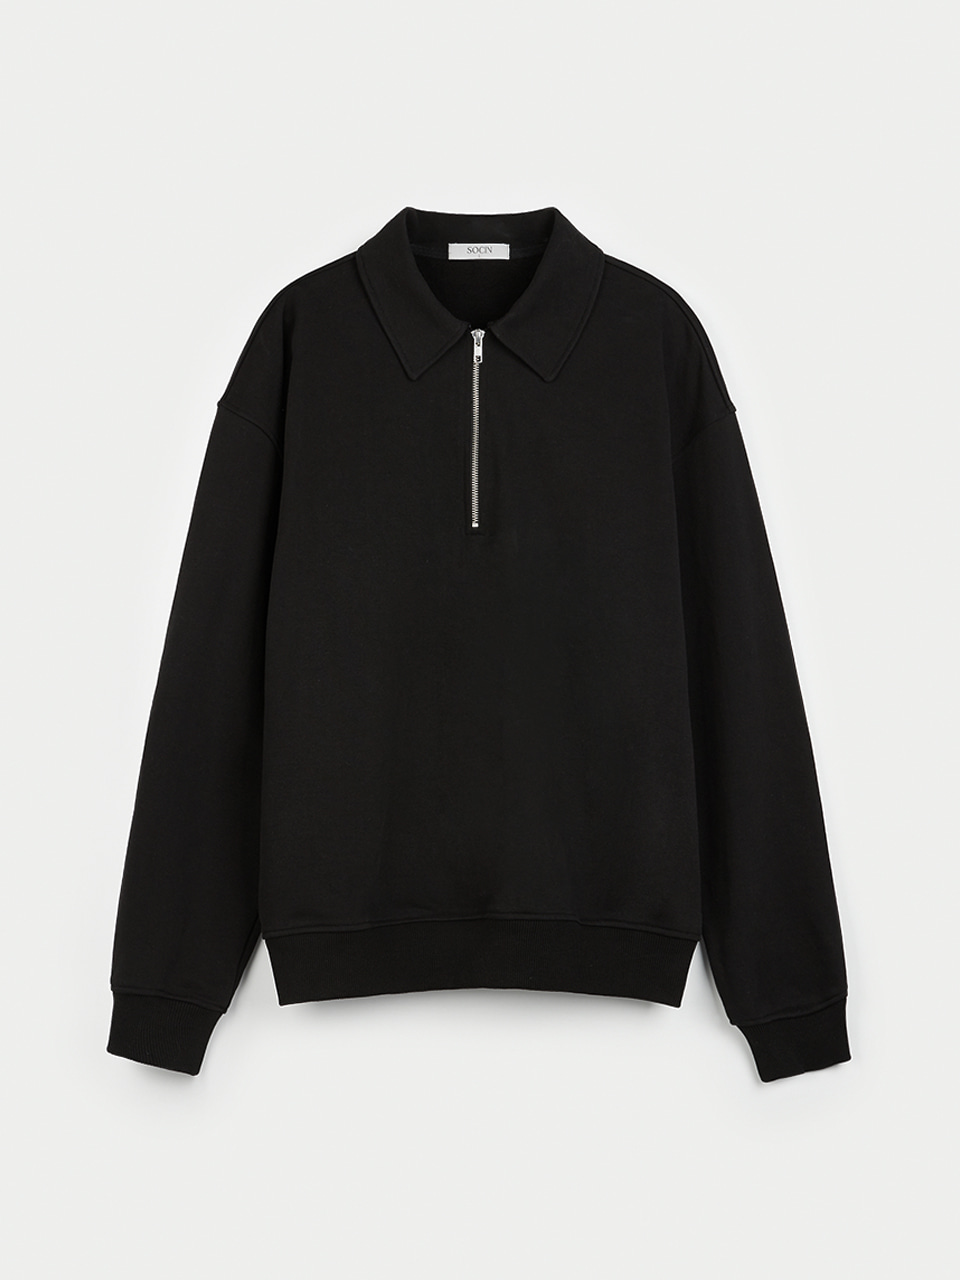 Collared Half Zip Sweatshirts (Black)